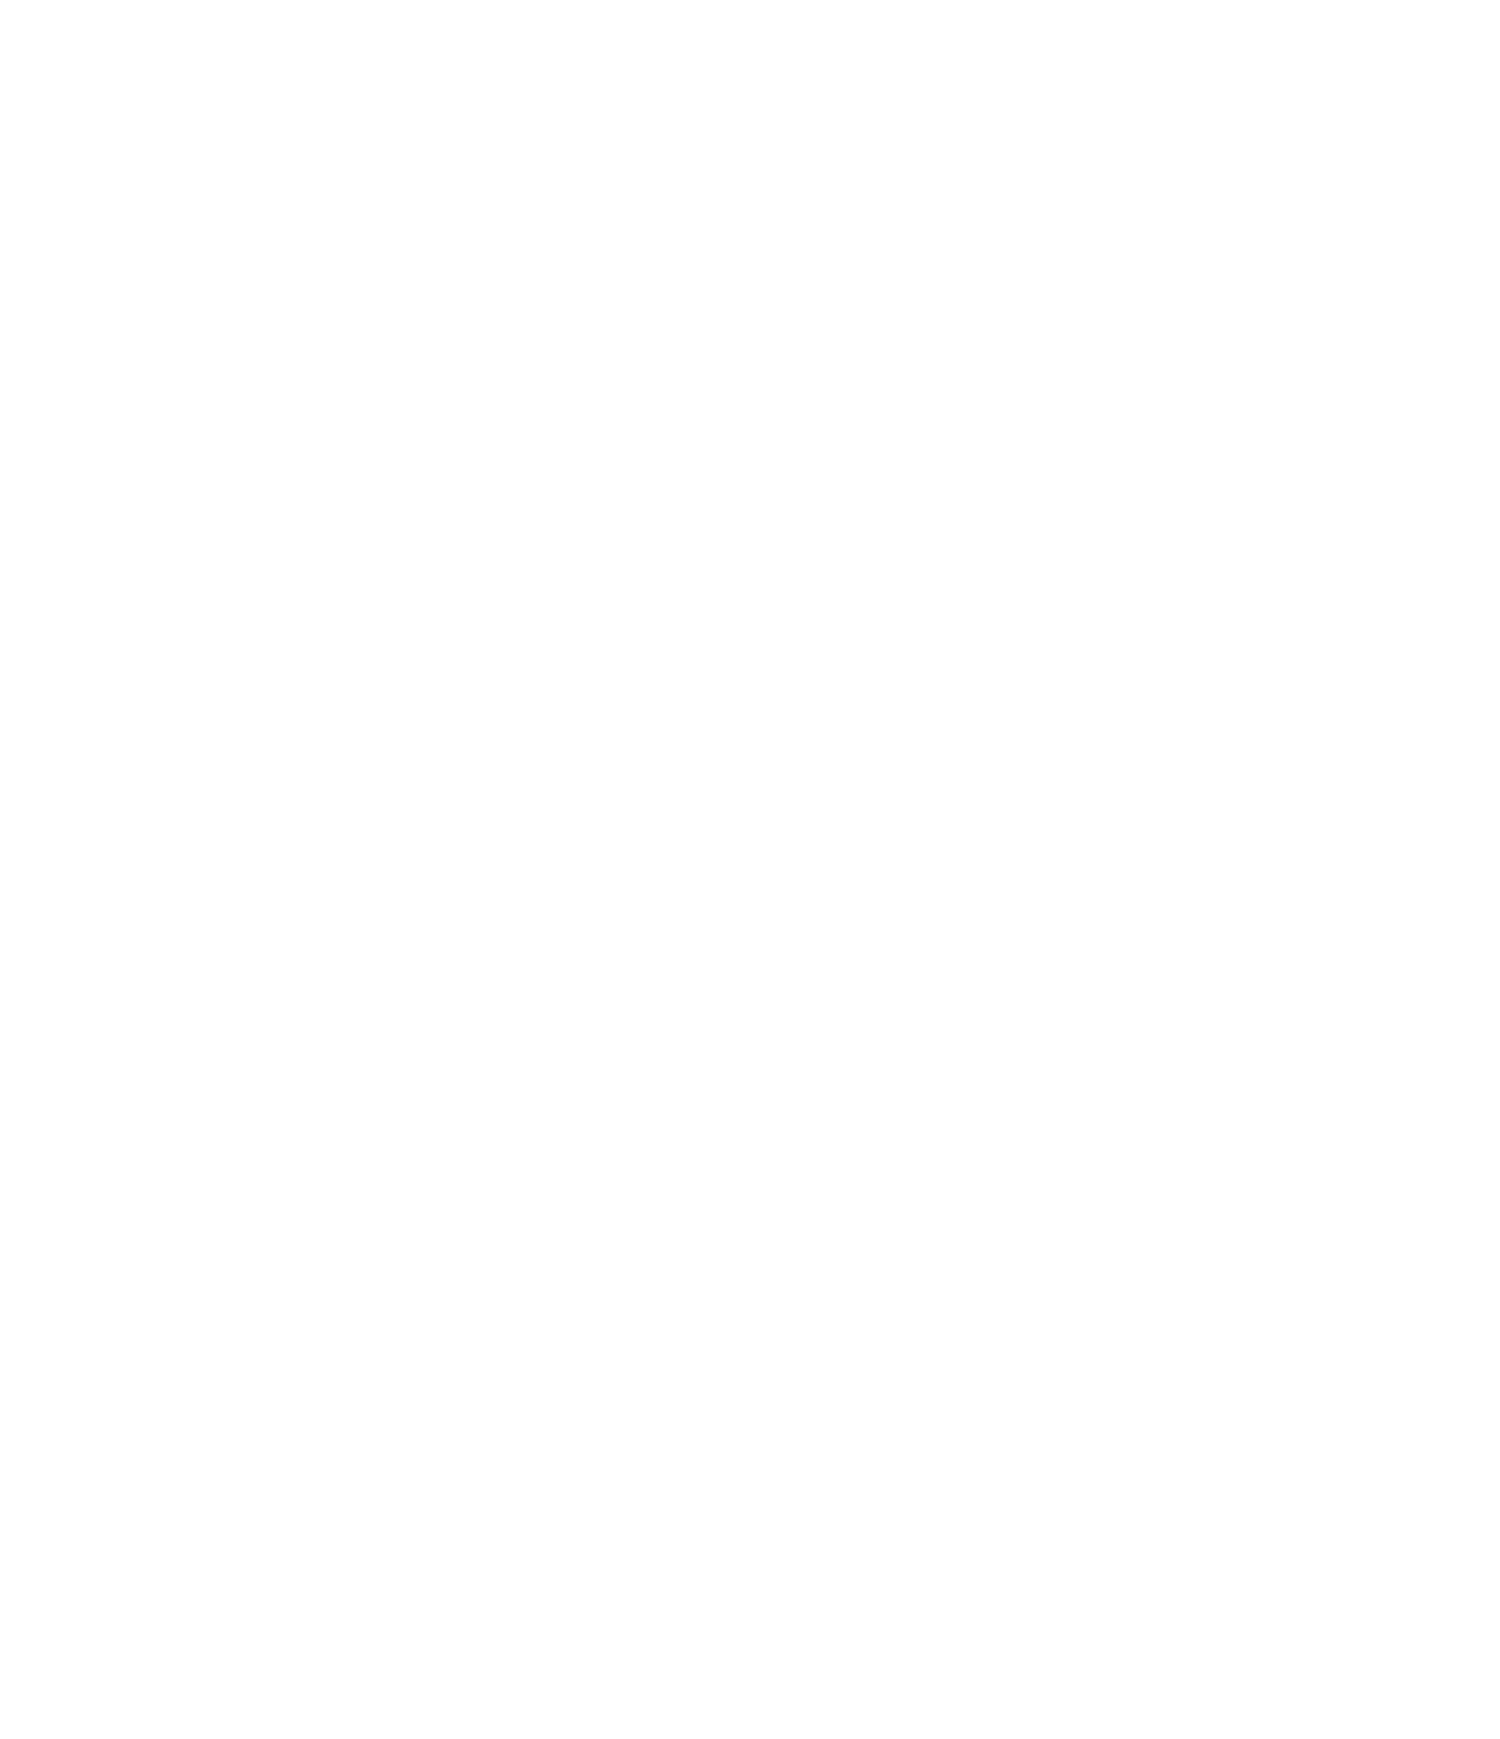 HKA LAW, PLLC